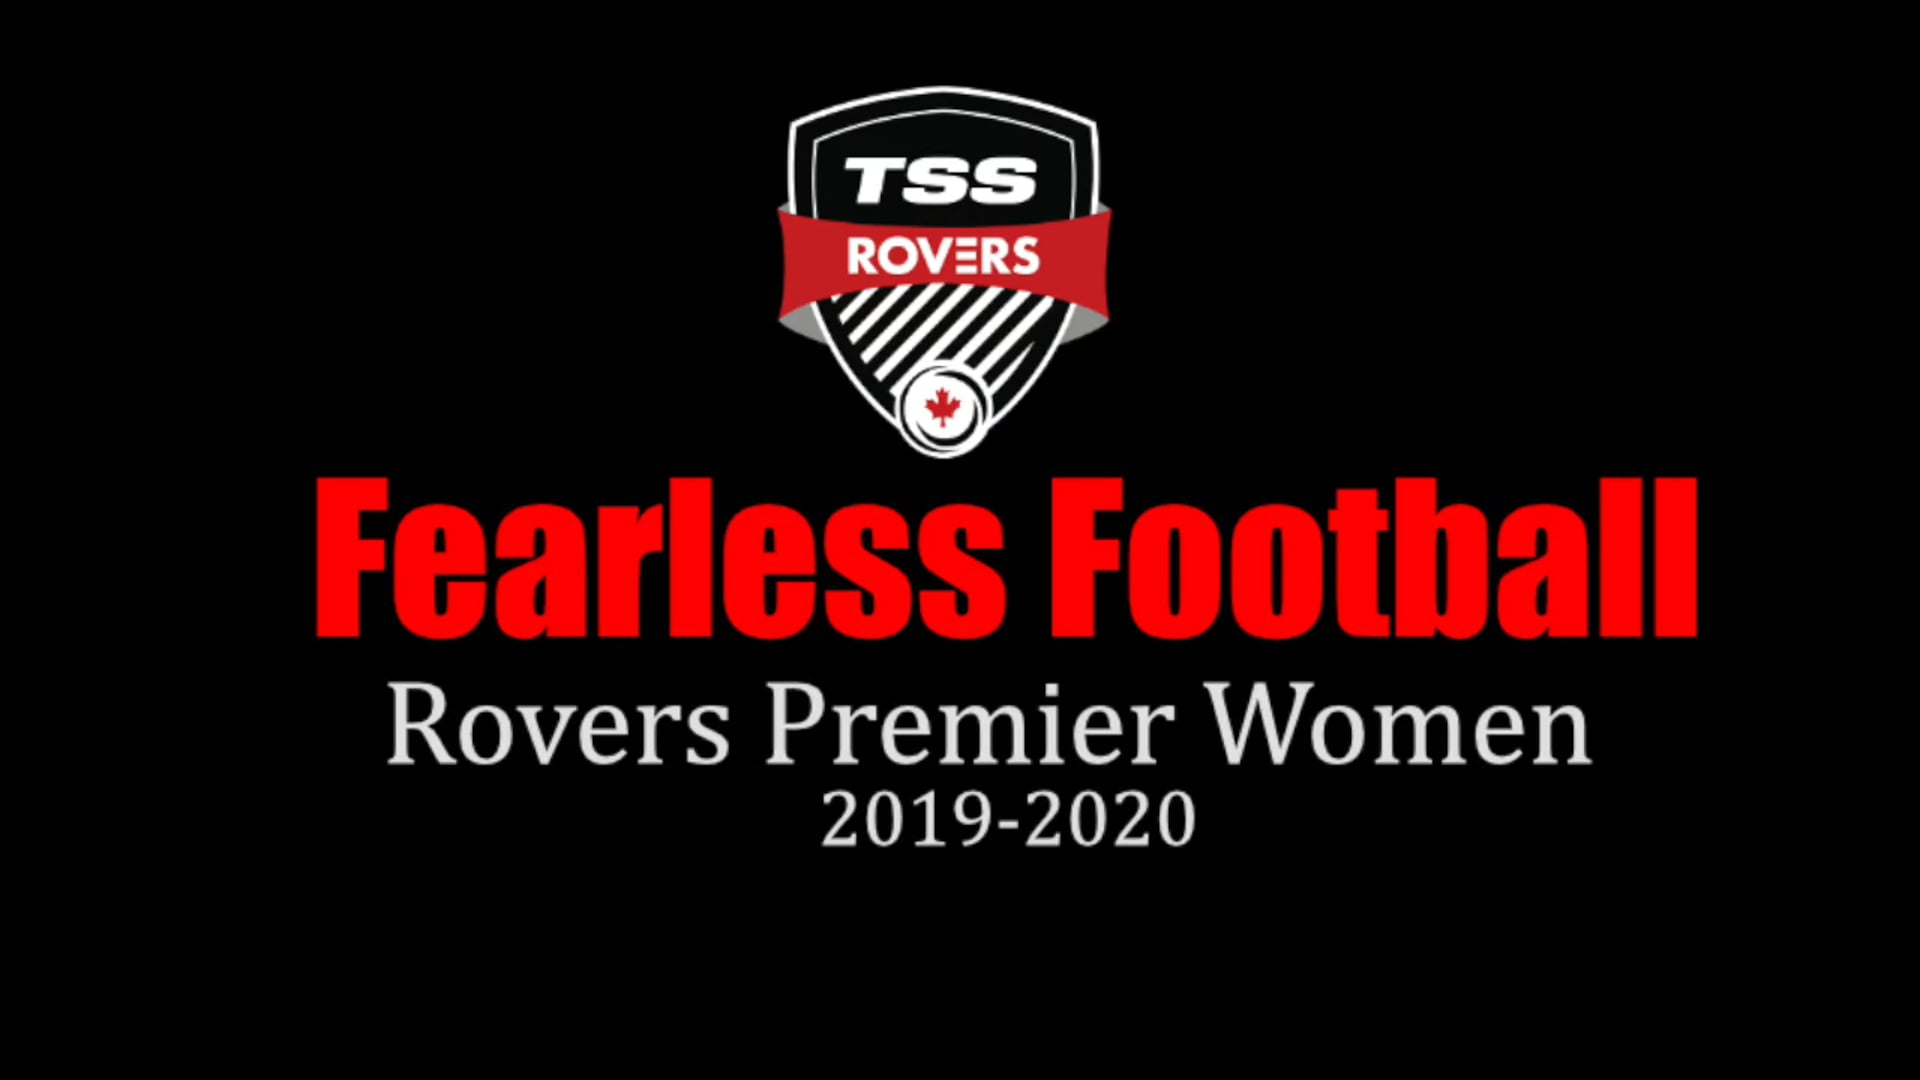 Fearless Football (2019-2020)